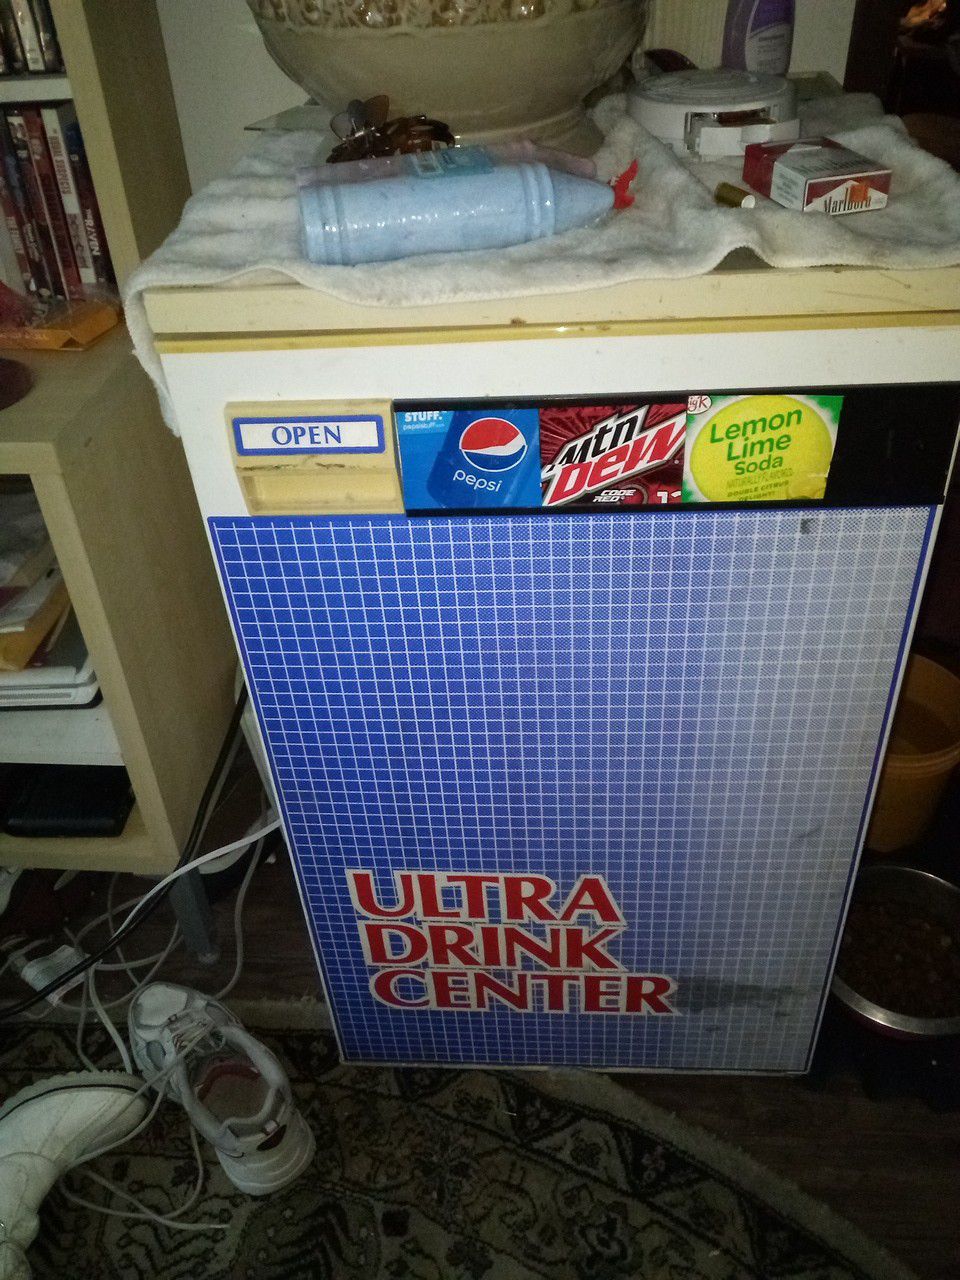 Drink soda vending machine